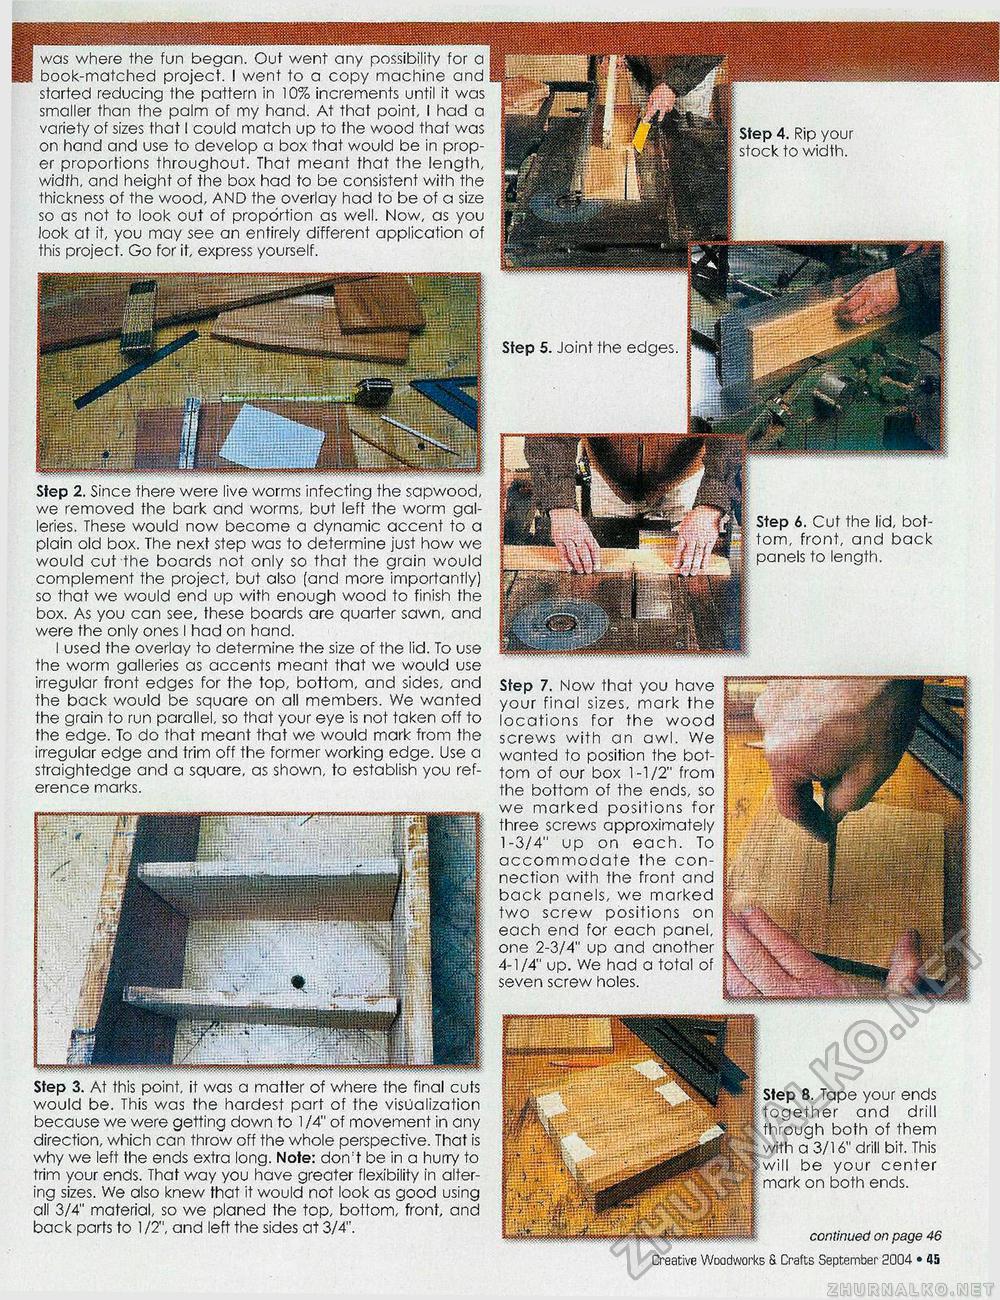 Creative Woodworks & crafts 2004-09,  45